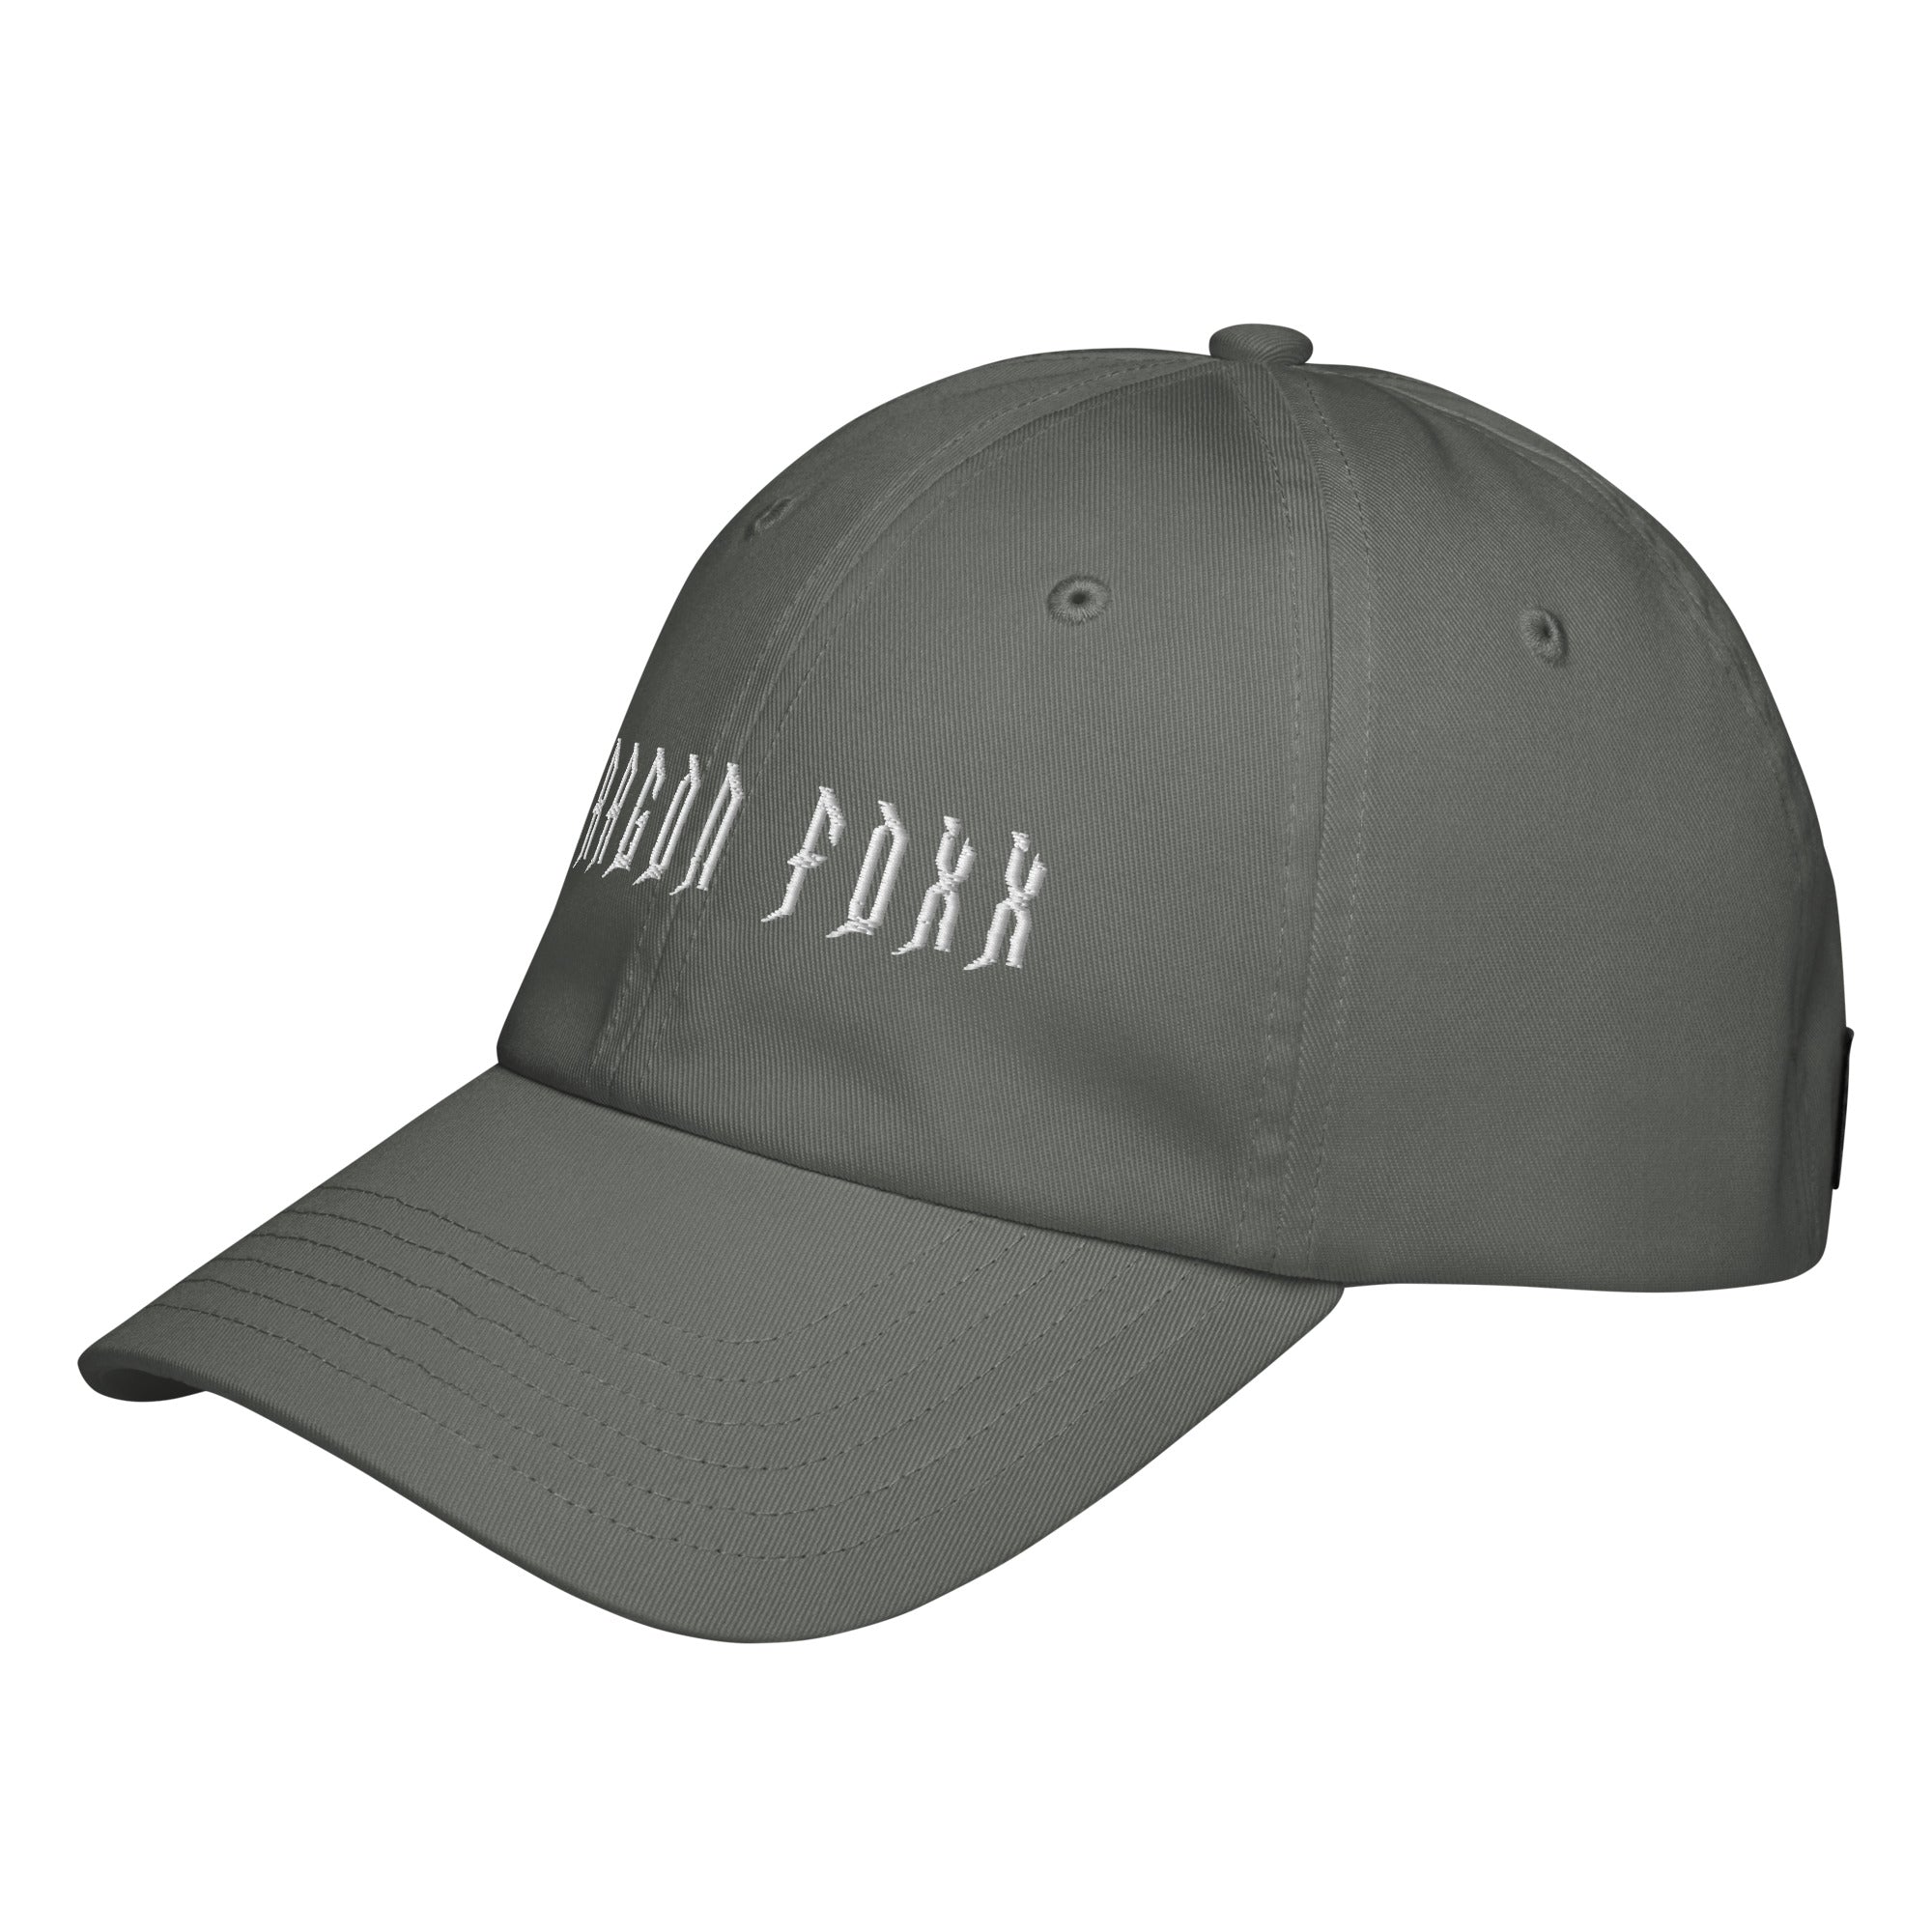 Dragon Foxx® - Under Armour® Dad Hat - Dad Hat - DRAGON FOXX™ - Dragon Foxx® - Under Armour® Dad Hat - 6473955_19343 - Grey - Accessories - Black - Dad Hats